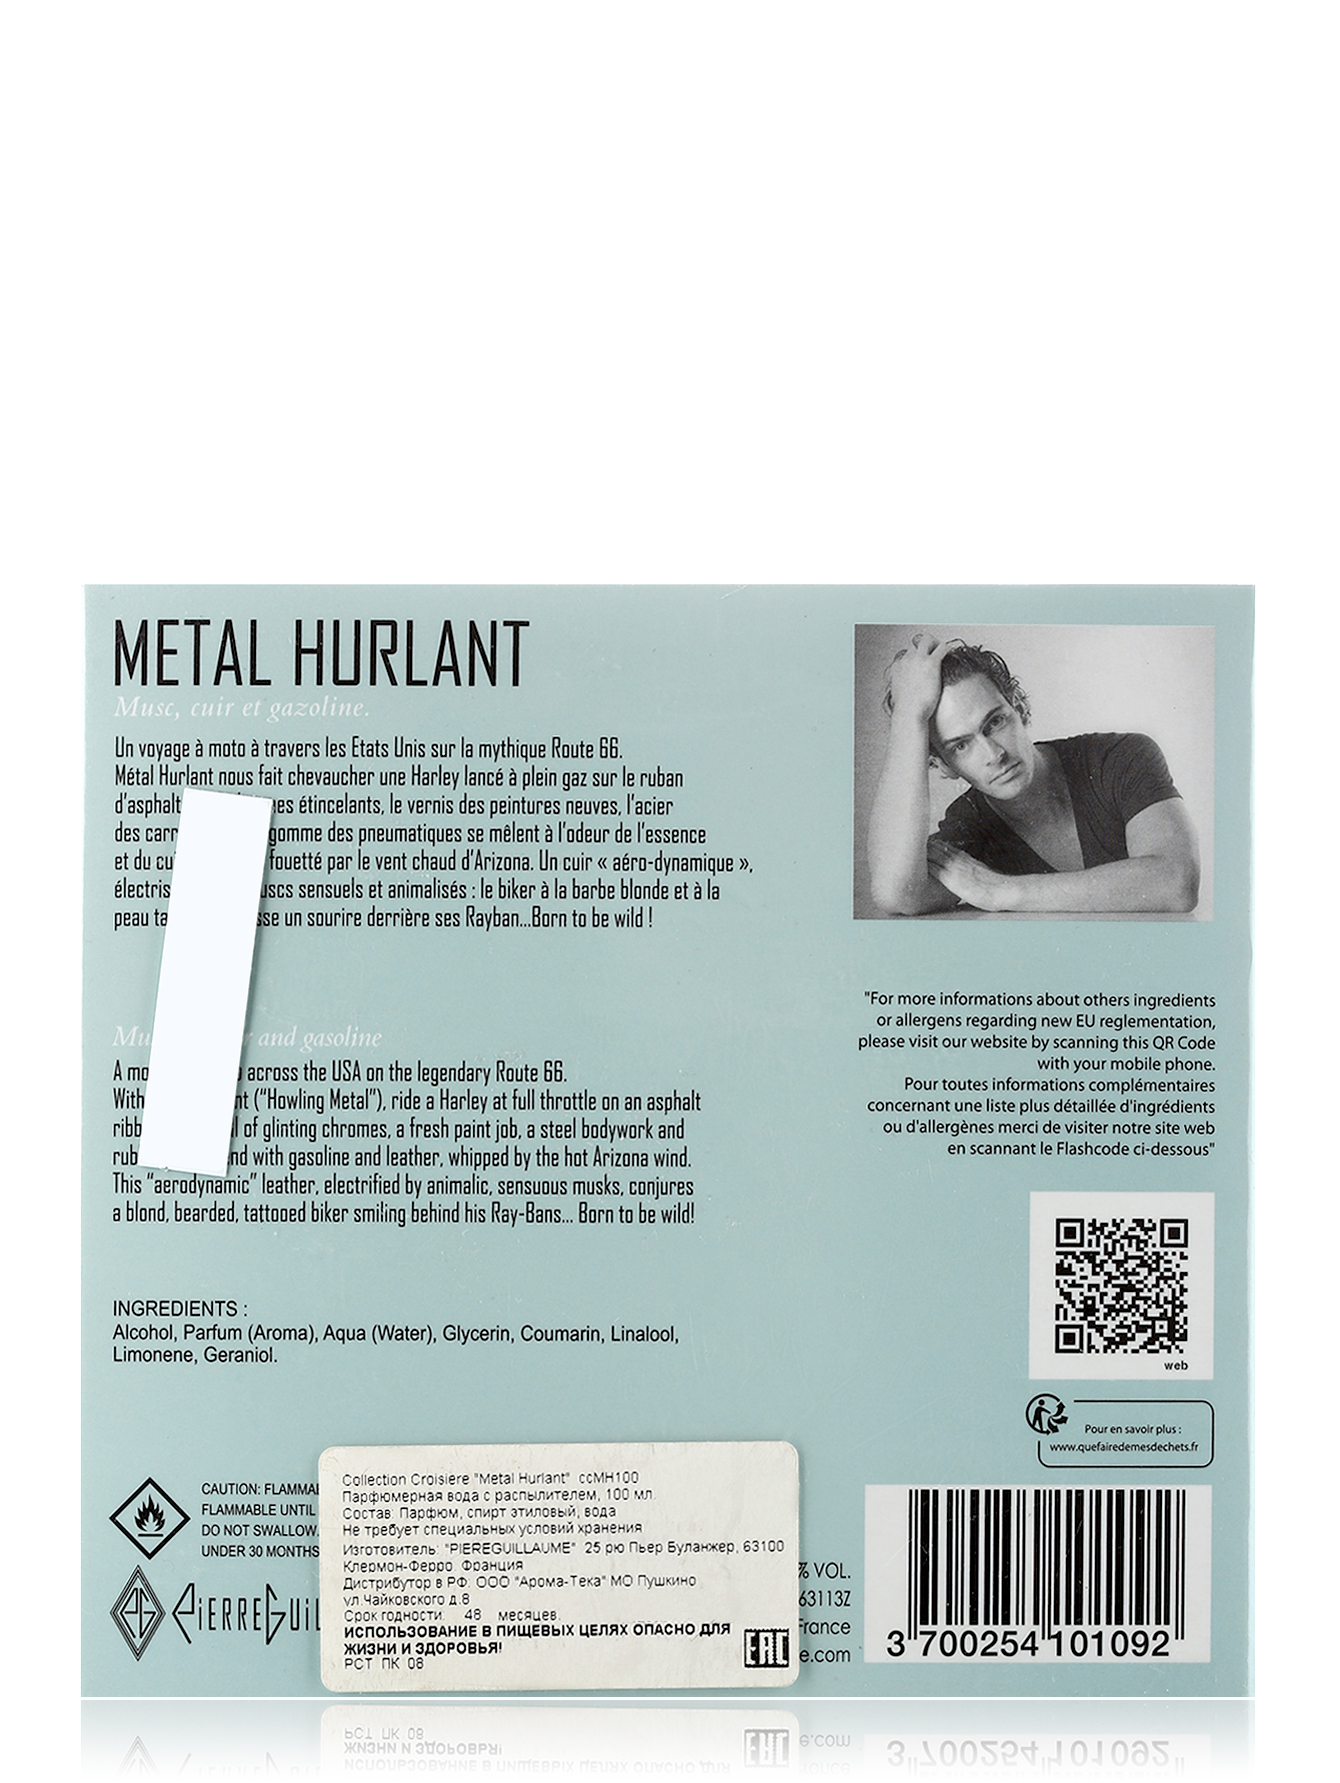  Туалетная вода - Metal Hurlant Collection Croisiere, 100ml - Модель Верх-Низ